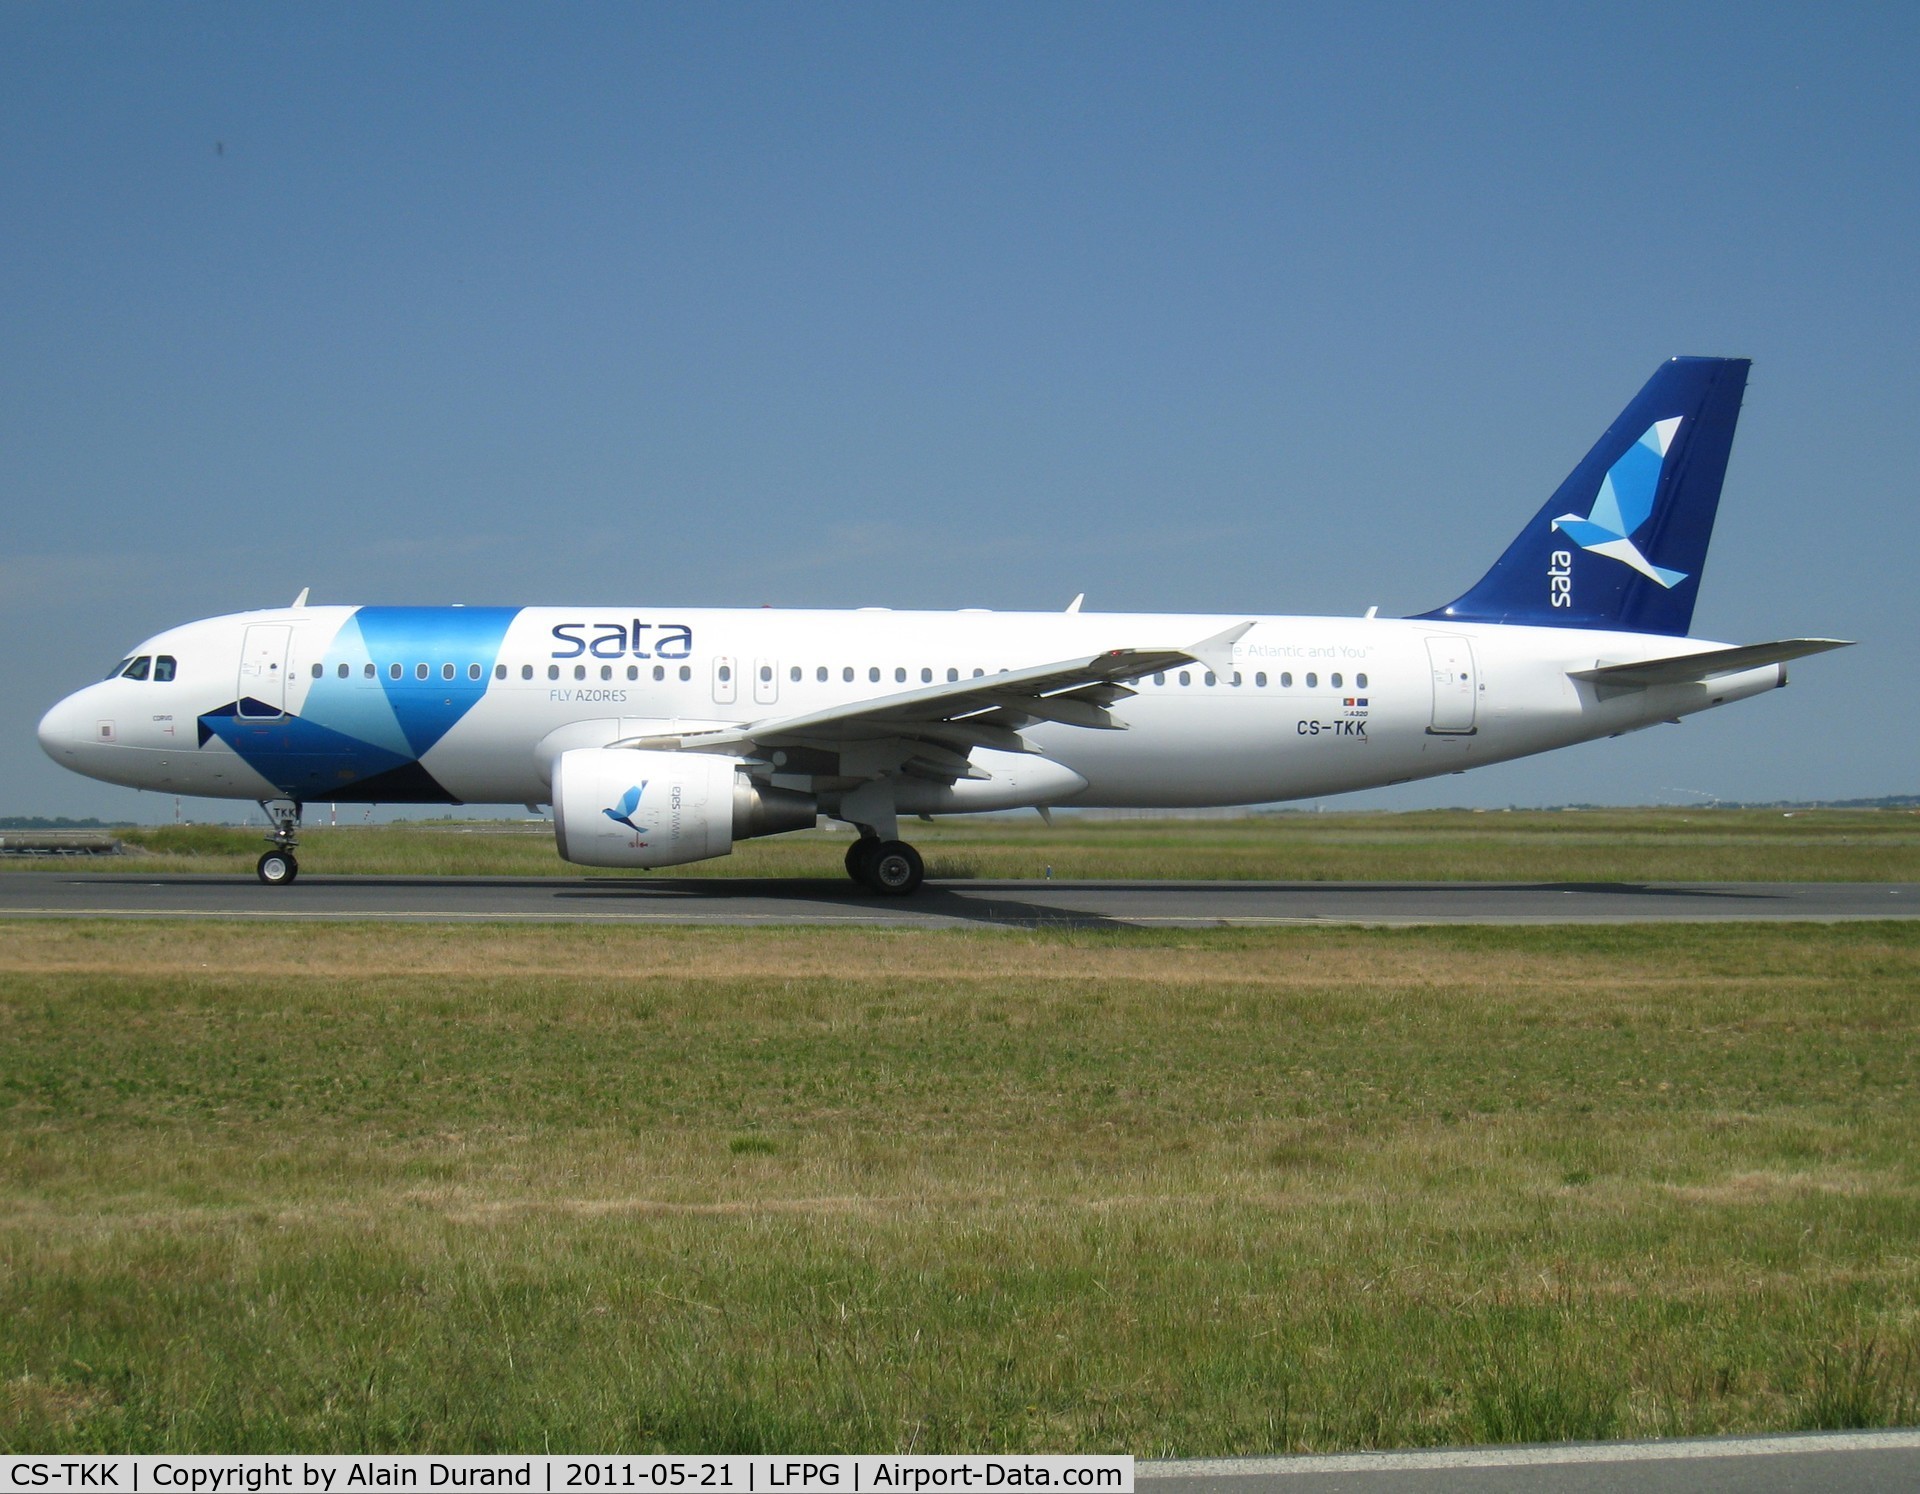 CS-TKK, 2005 Airbus A320-214 C/N 2390, 